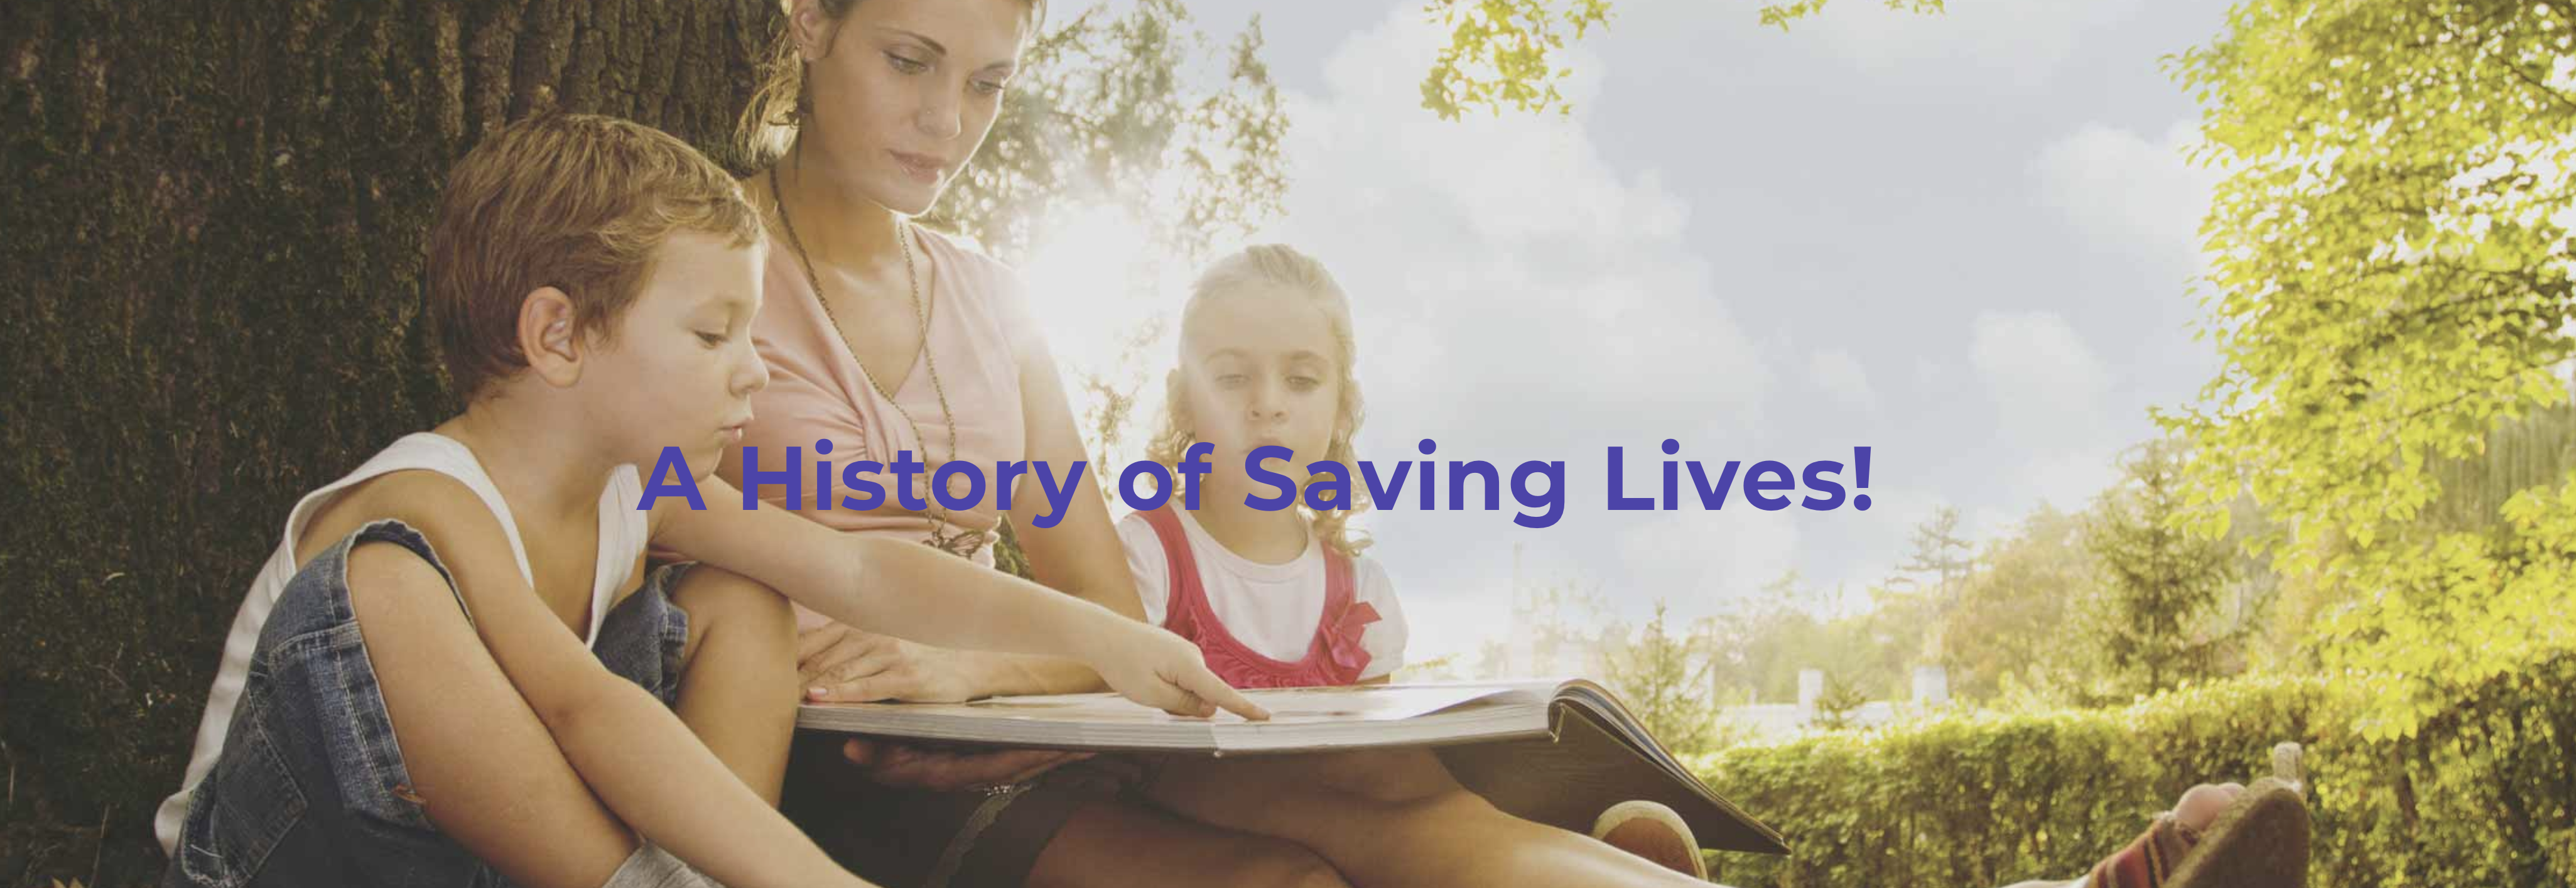 History of saving lives